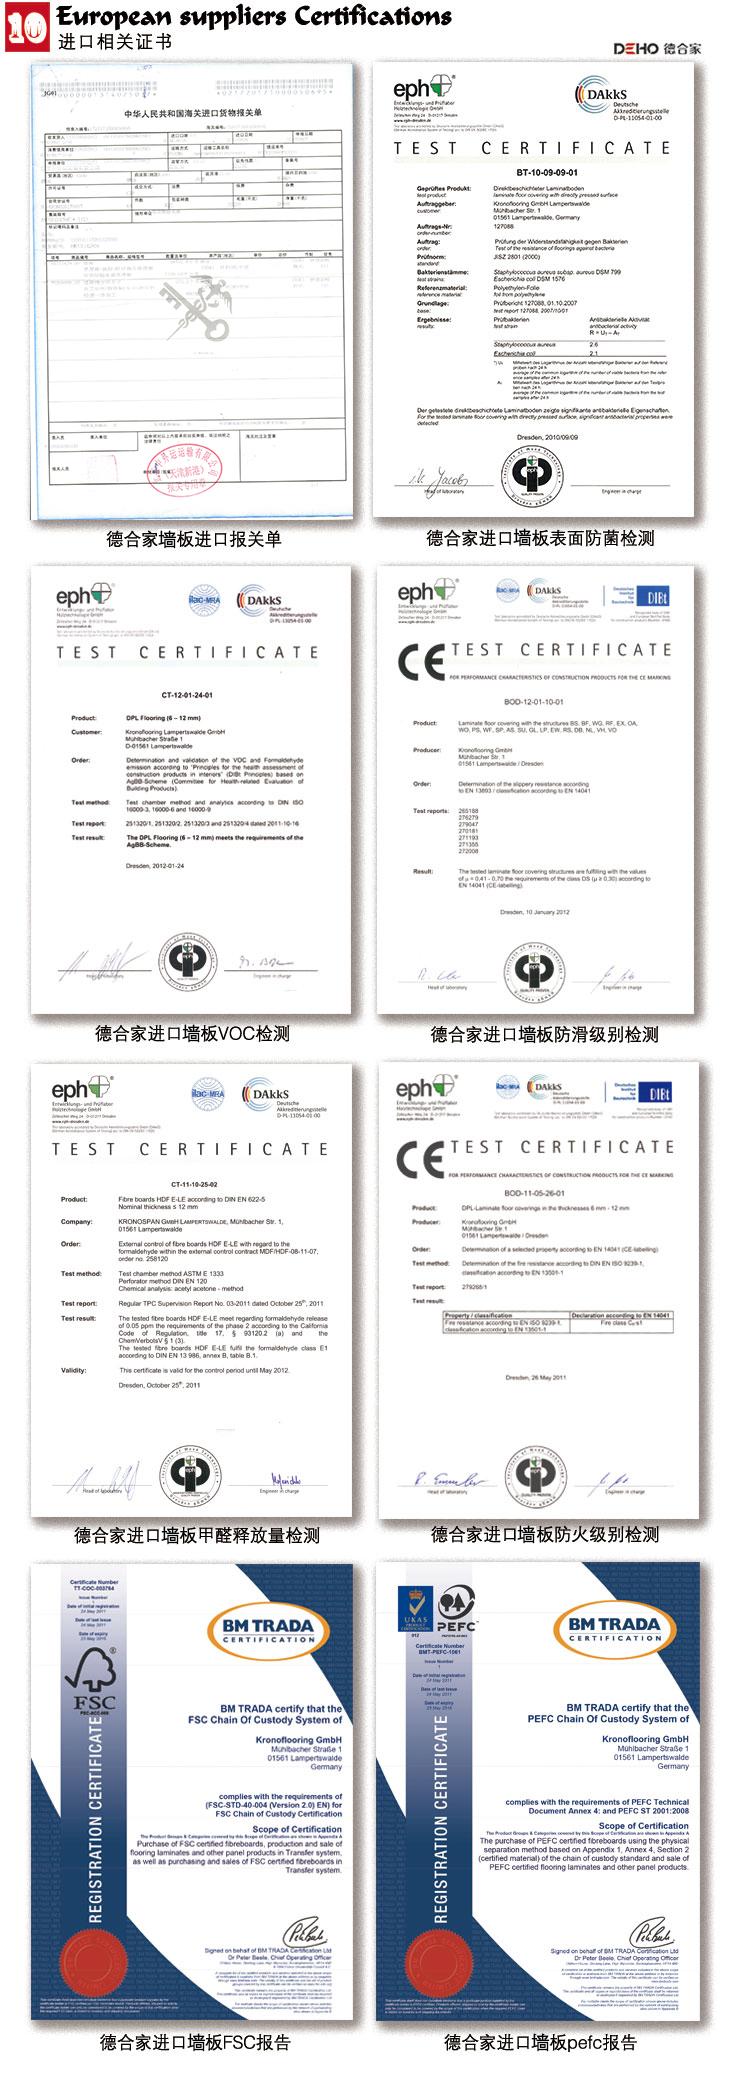 10-European-suppliers-Certifications.jpg